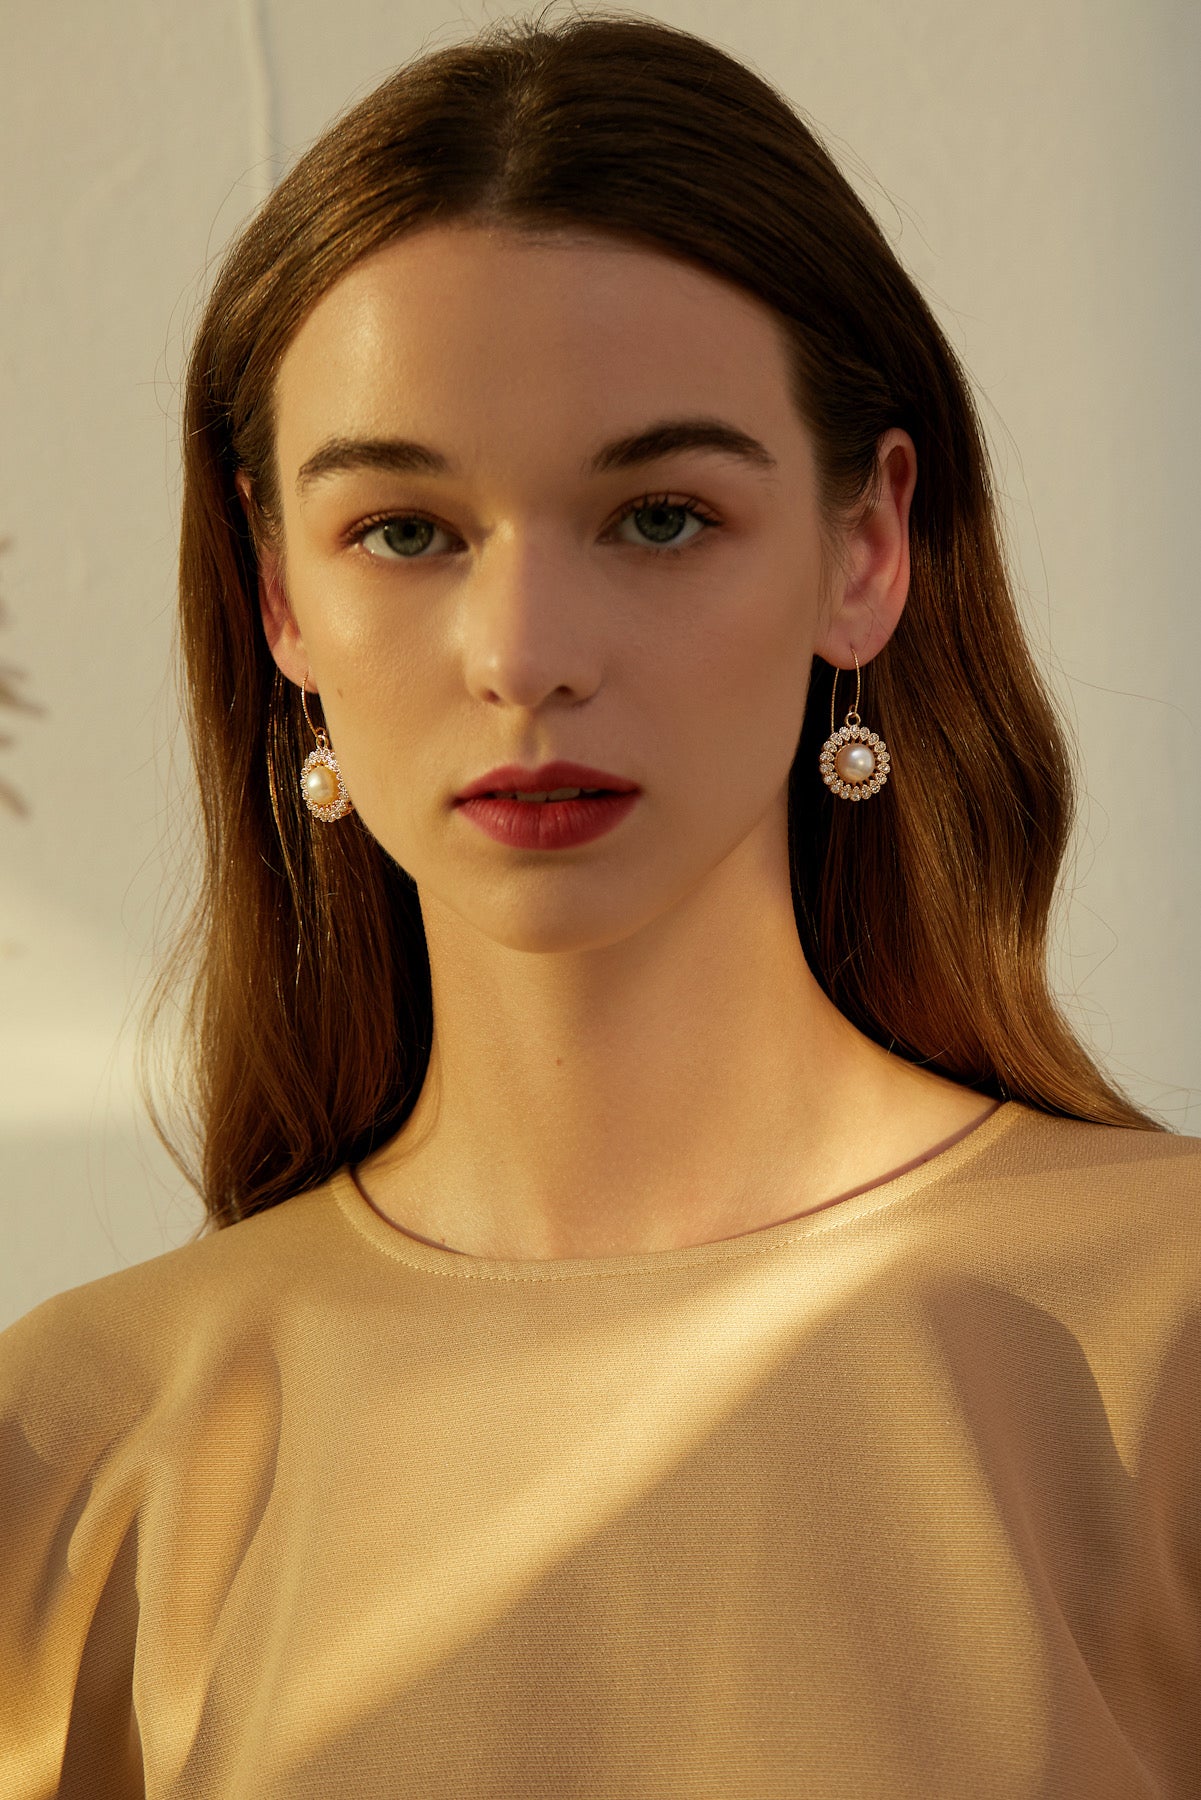 SKYE San Francisco Shop Chic Modern Elegant Classy Women Jewelry French Parisian Minimalist Chantilly Crystal Pearl Drop Earrings 9